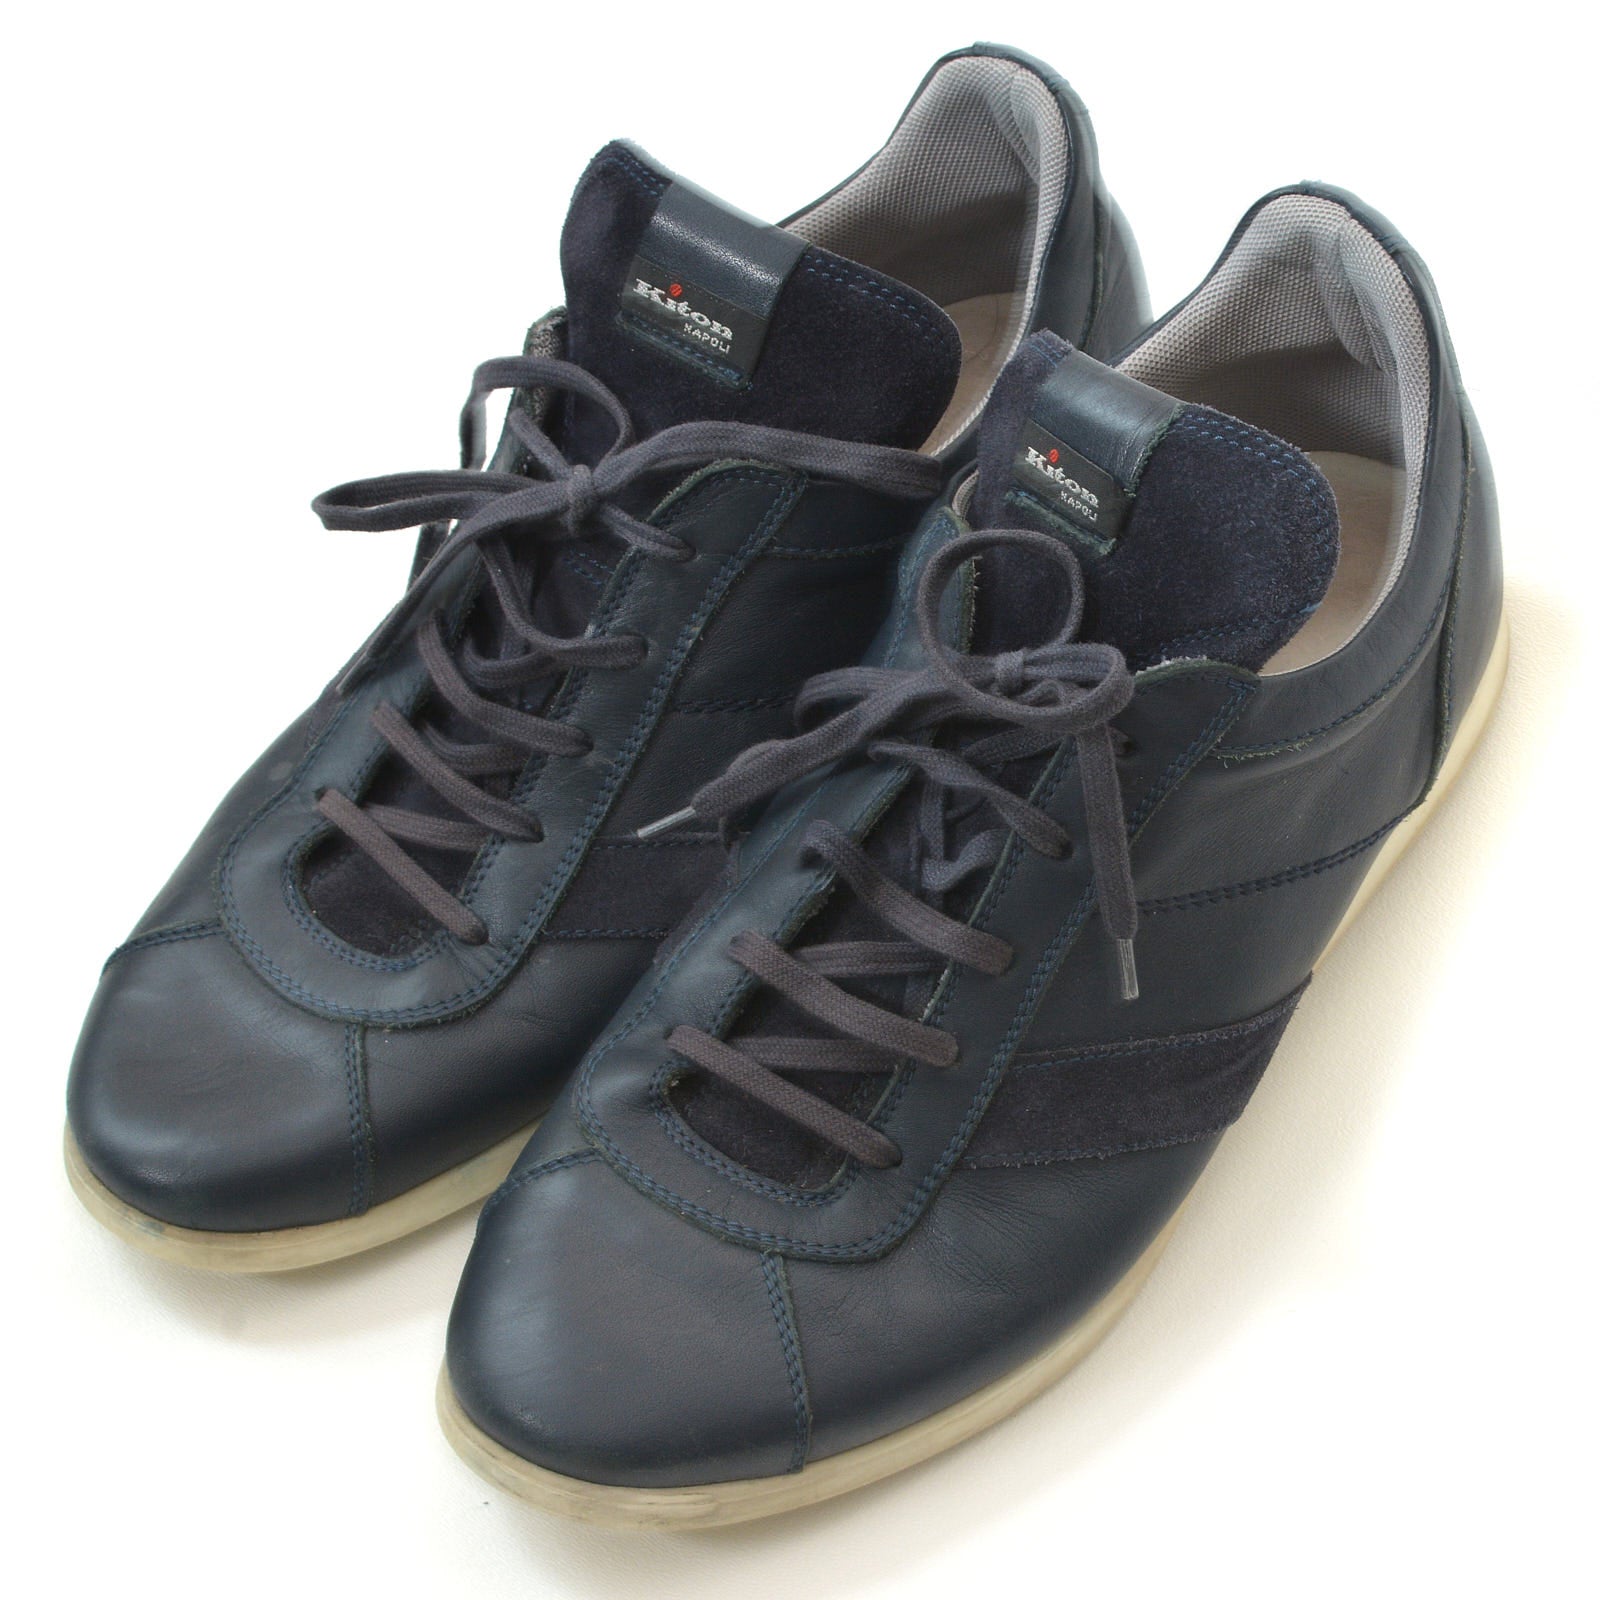 KITON Napoli Navy Blue Suede-Leather 5 Eyelet Low-Top Sneaker Shoes US 9 KITON